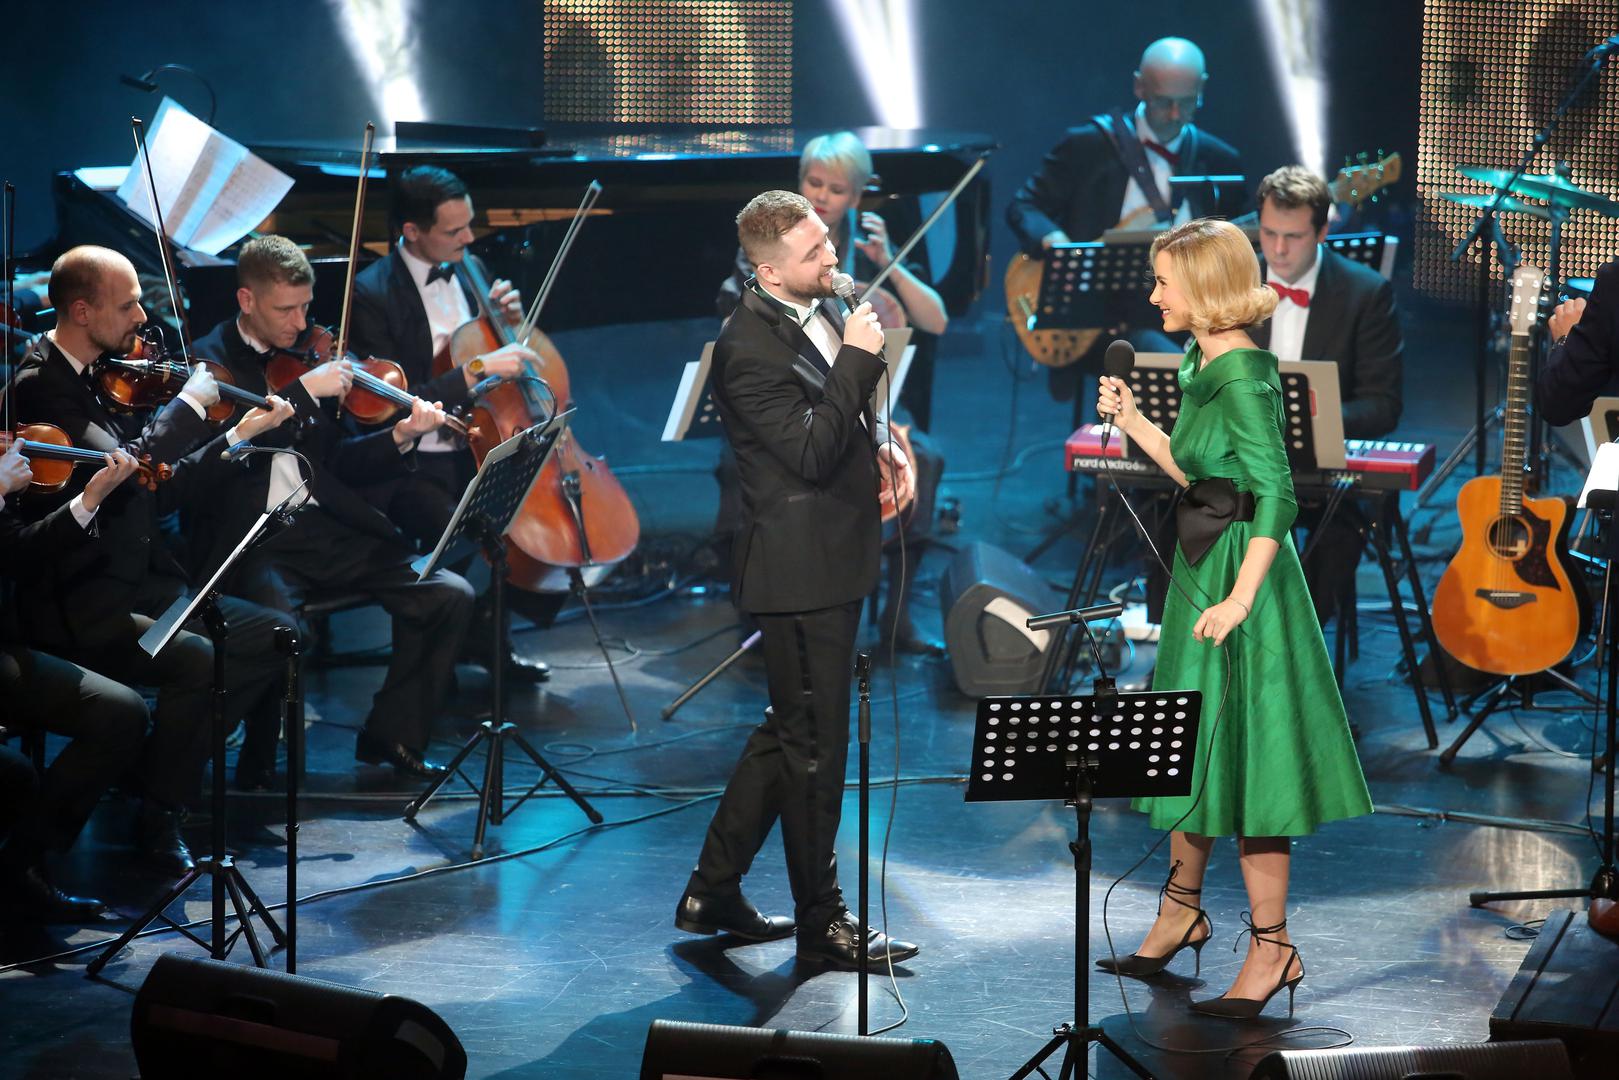 U duetu su zapjevali Matija Cvek i Nika Turković.